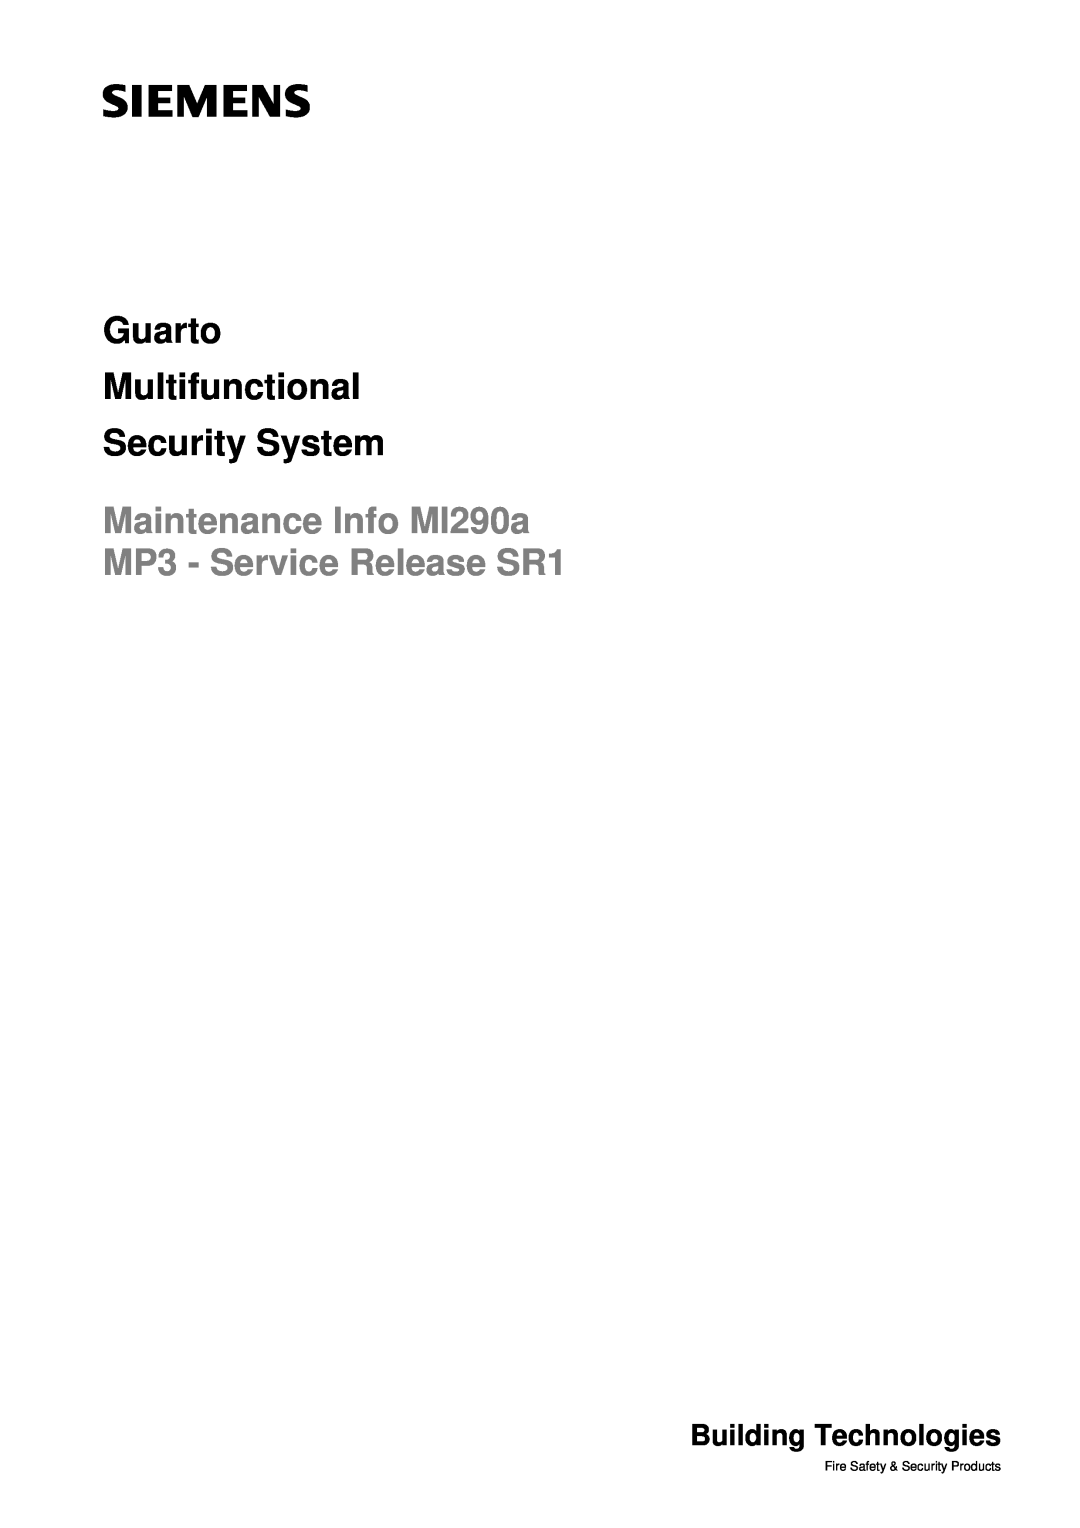 Siemens MI290A manual Guarto Multifunctional Security System, Maintenance Info MI290a MP3 - Service Release SR1 